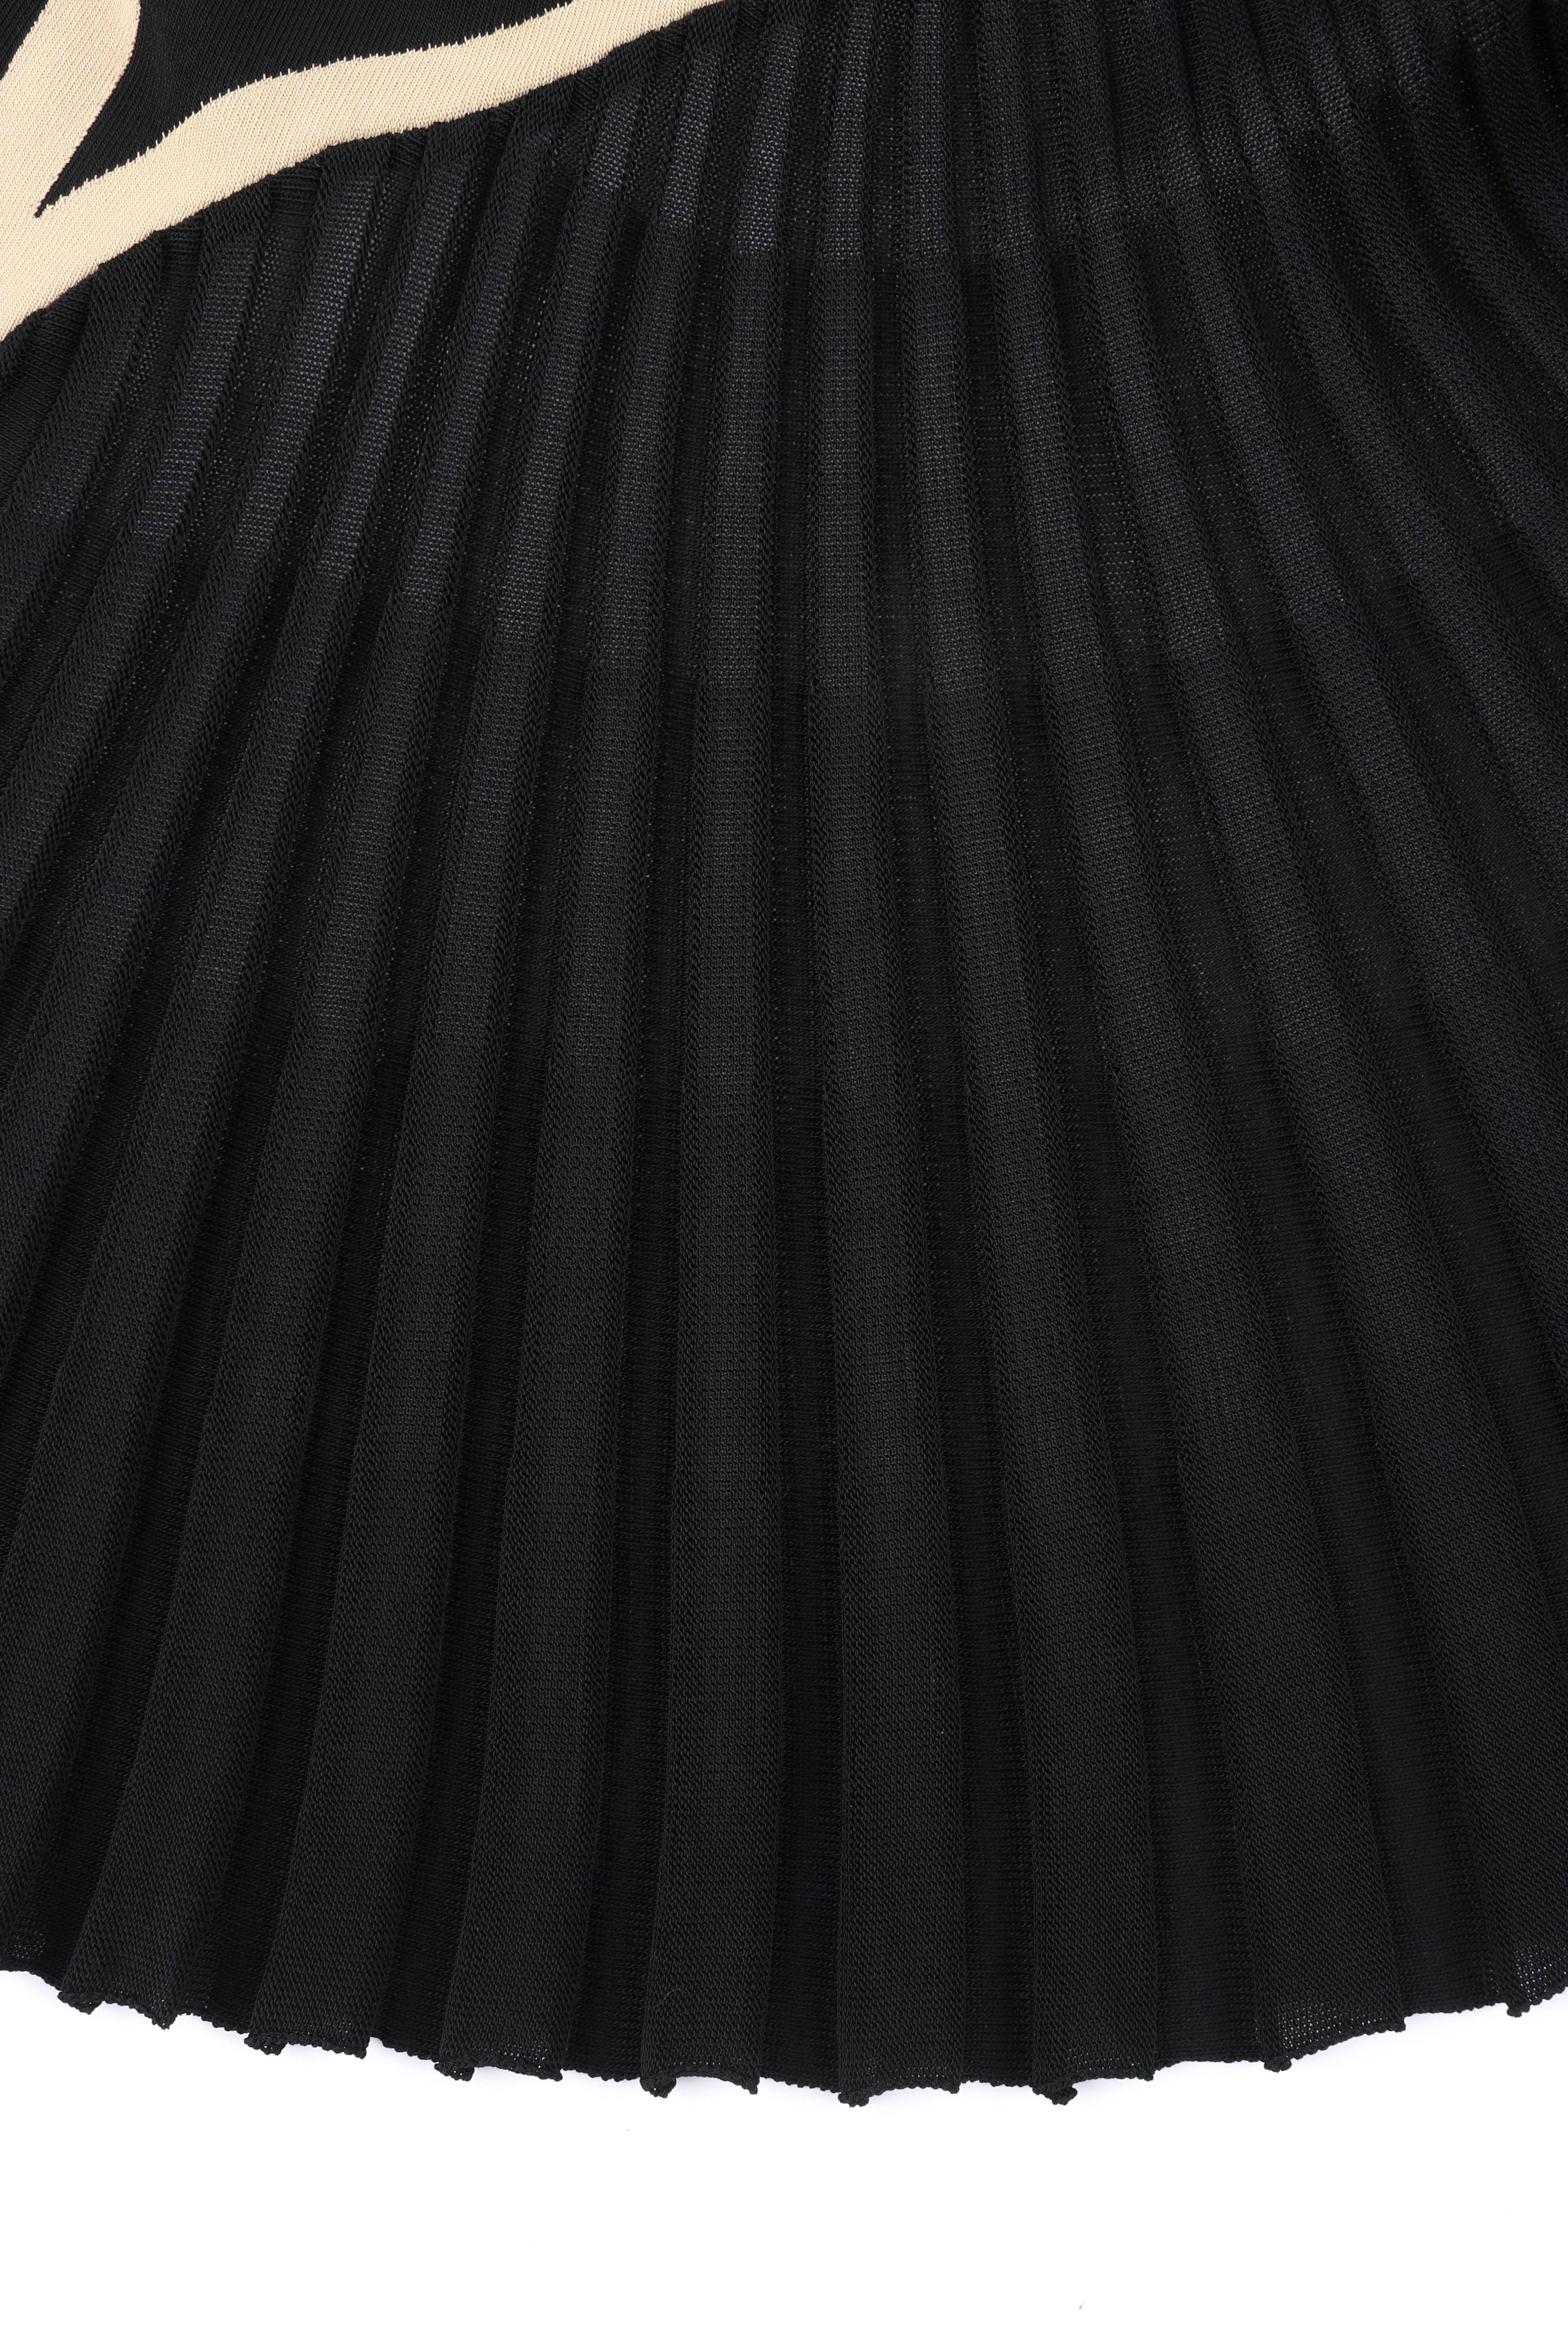 ALEXANDER McQUEEN Resort 2009 Black Beige Mesh Pleated Cold Shoulder Knit Dress 3